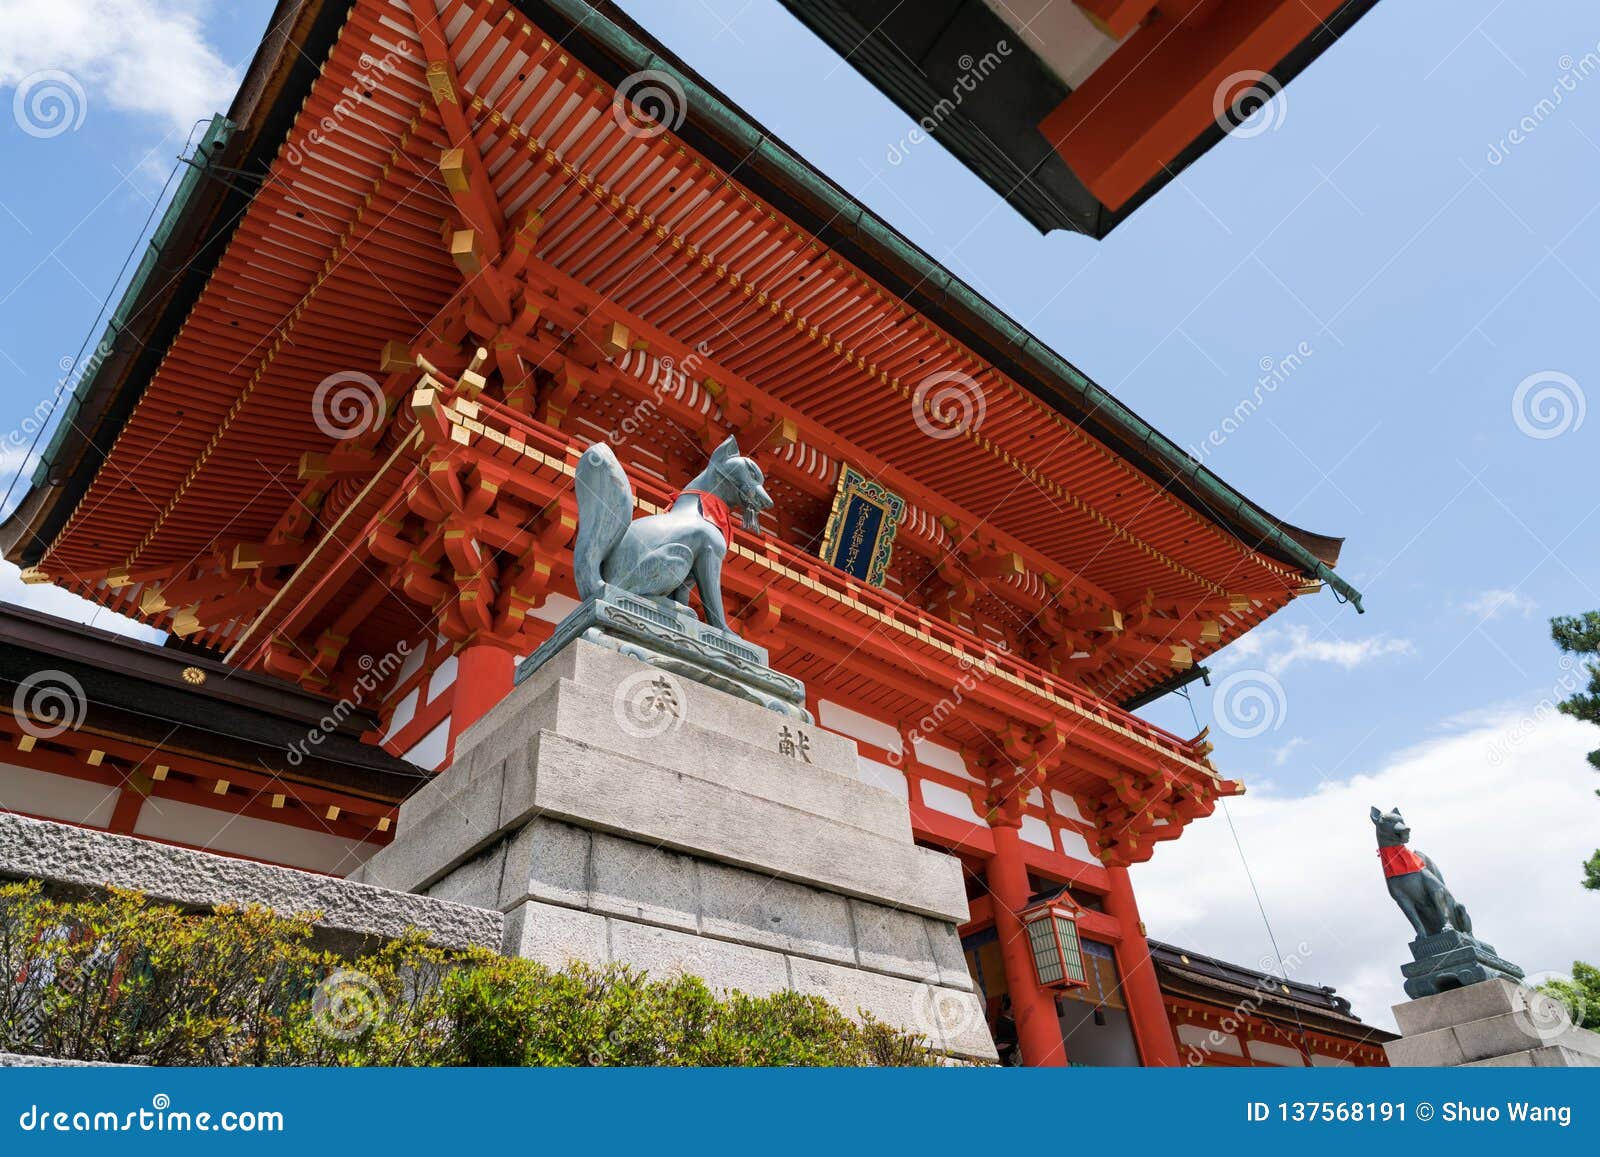 a view of fushimi inari shrine